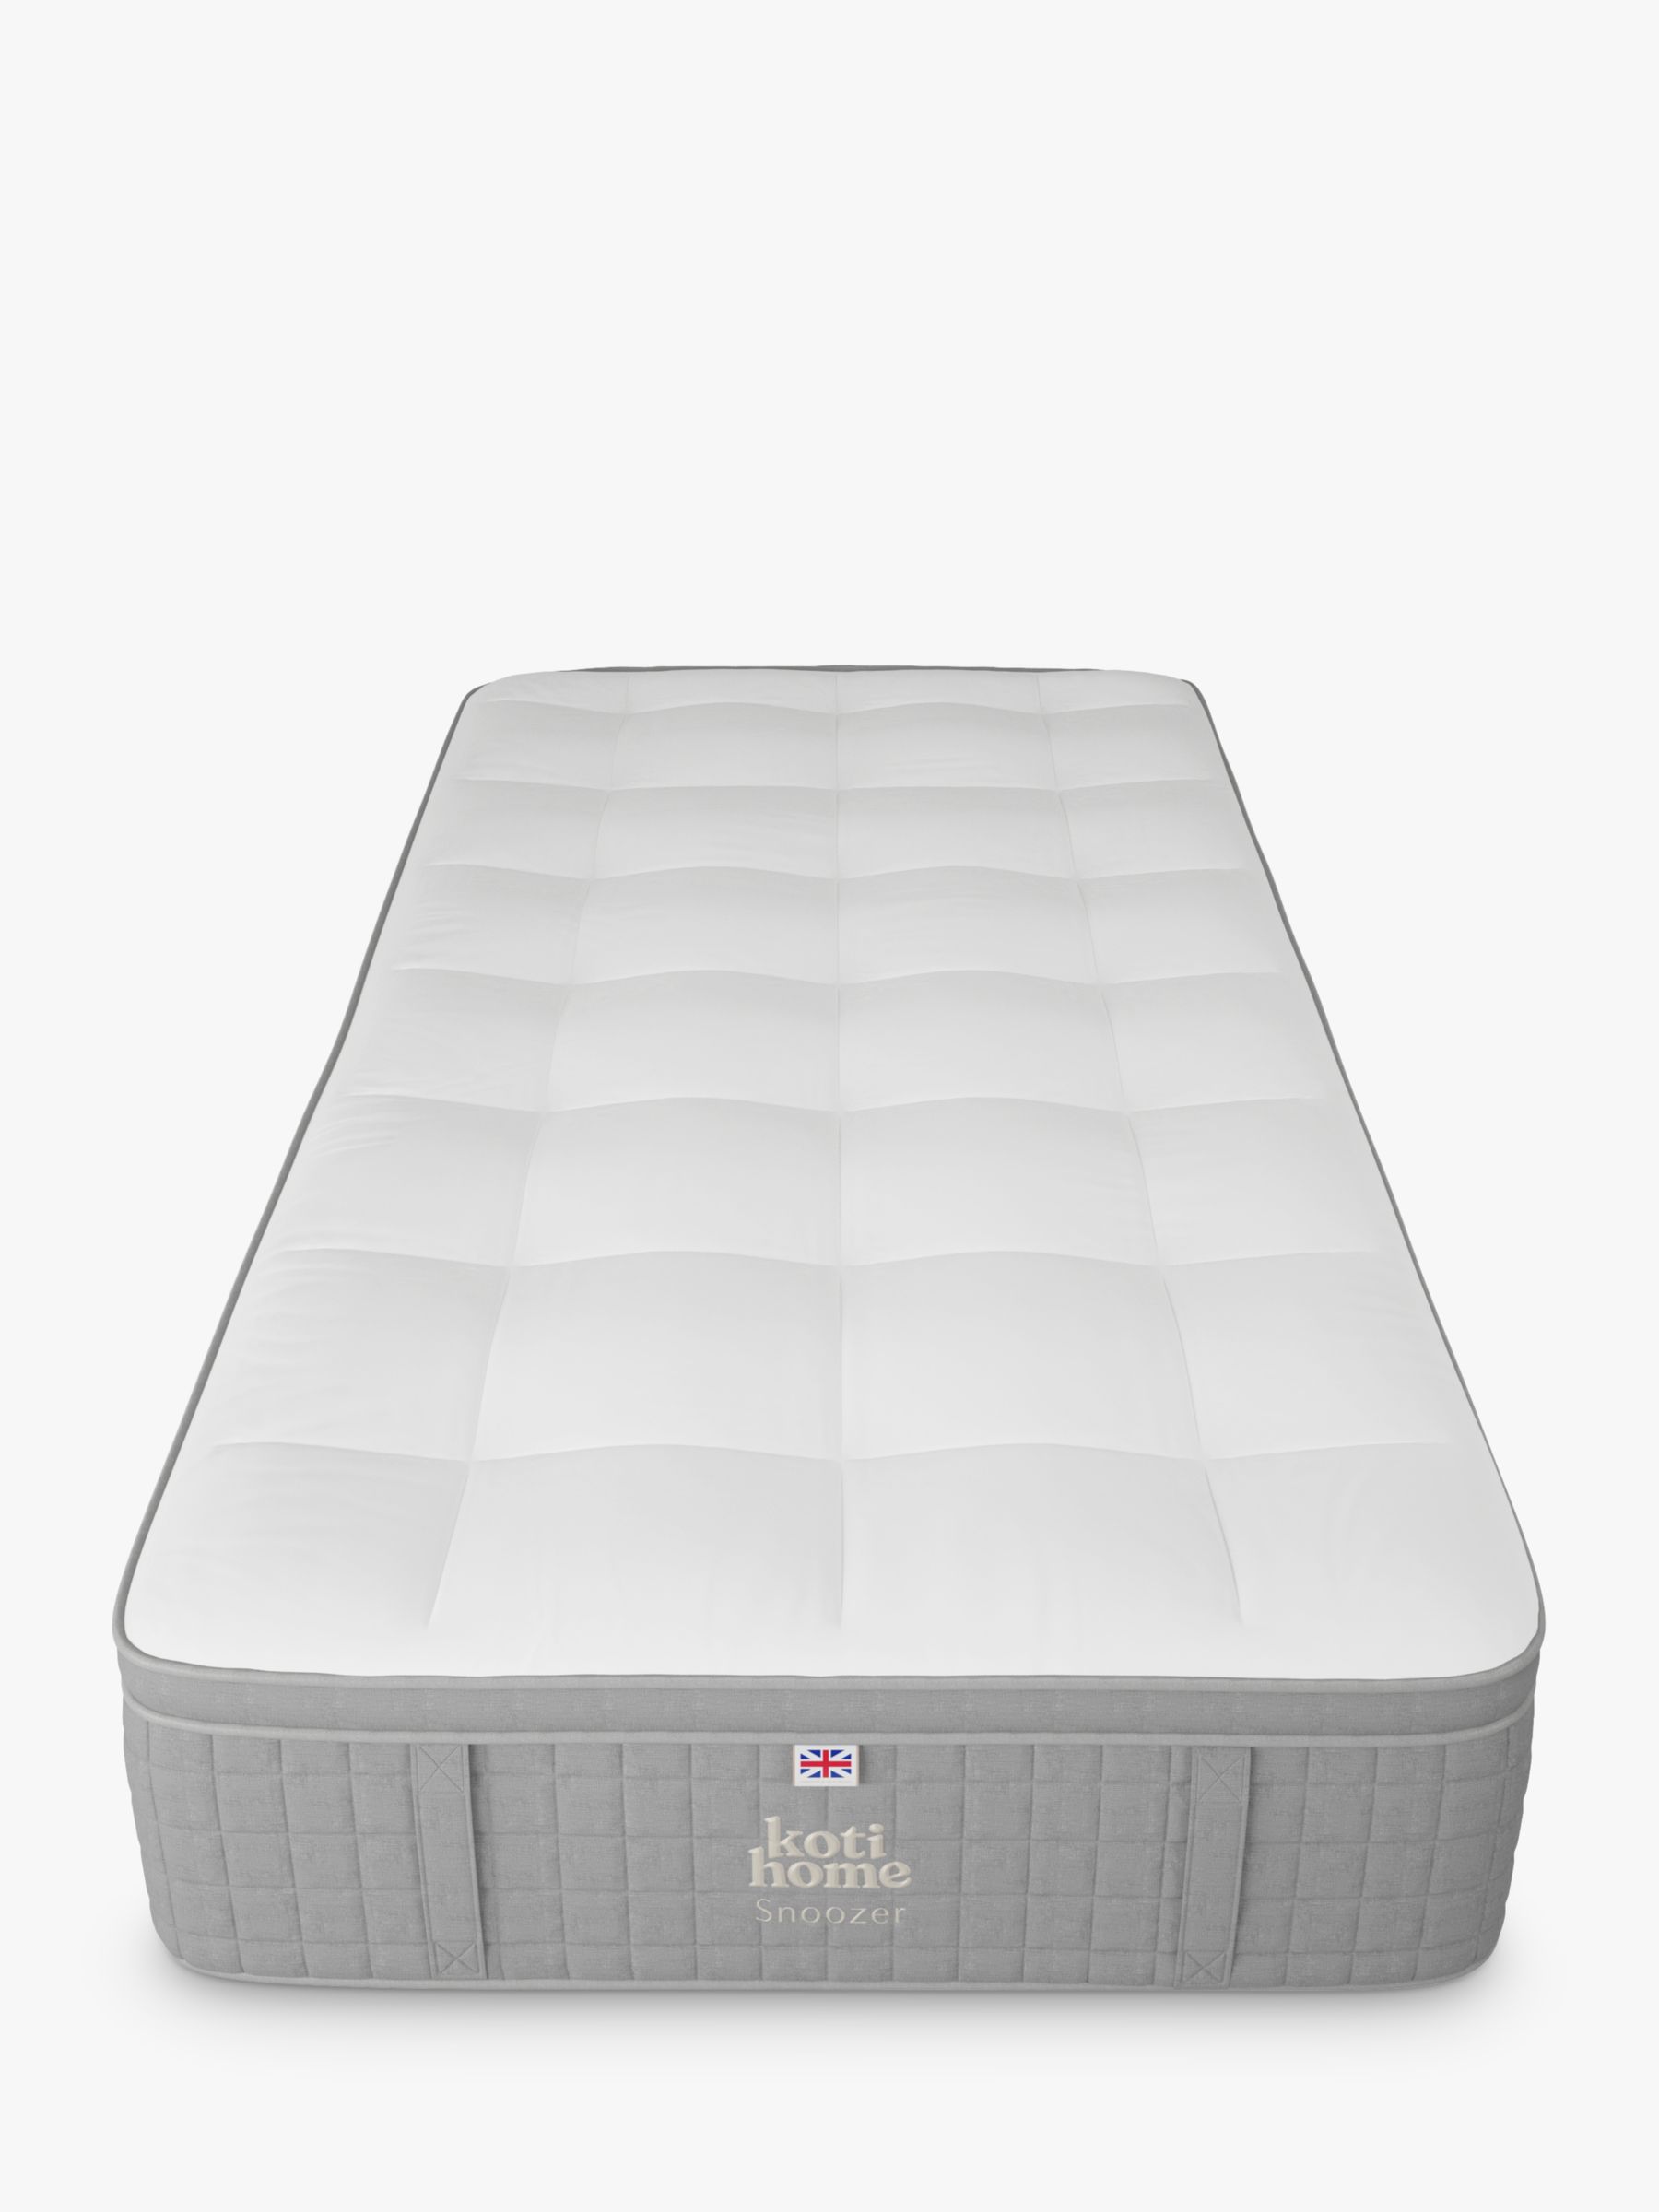 Photo of Koti home snoozer pocket spring mattress medium support single